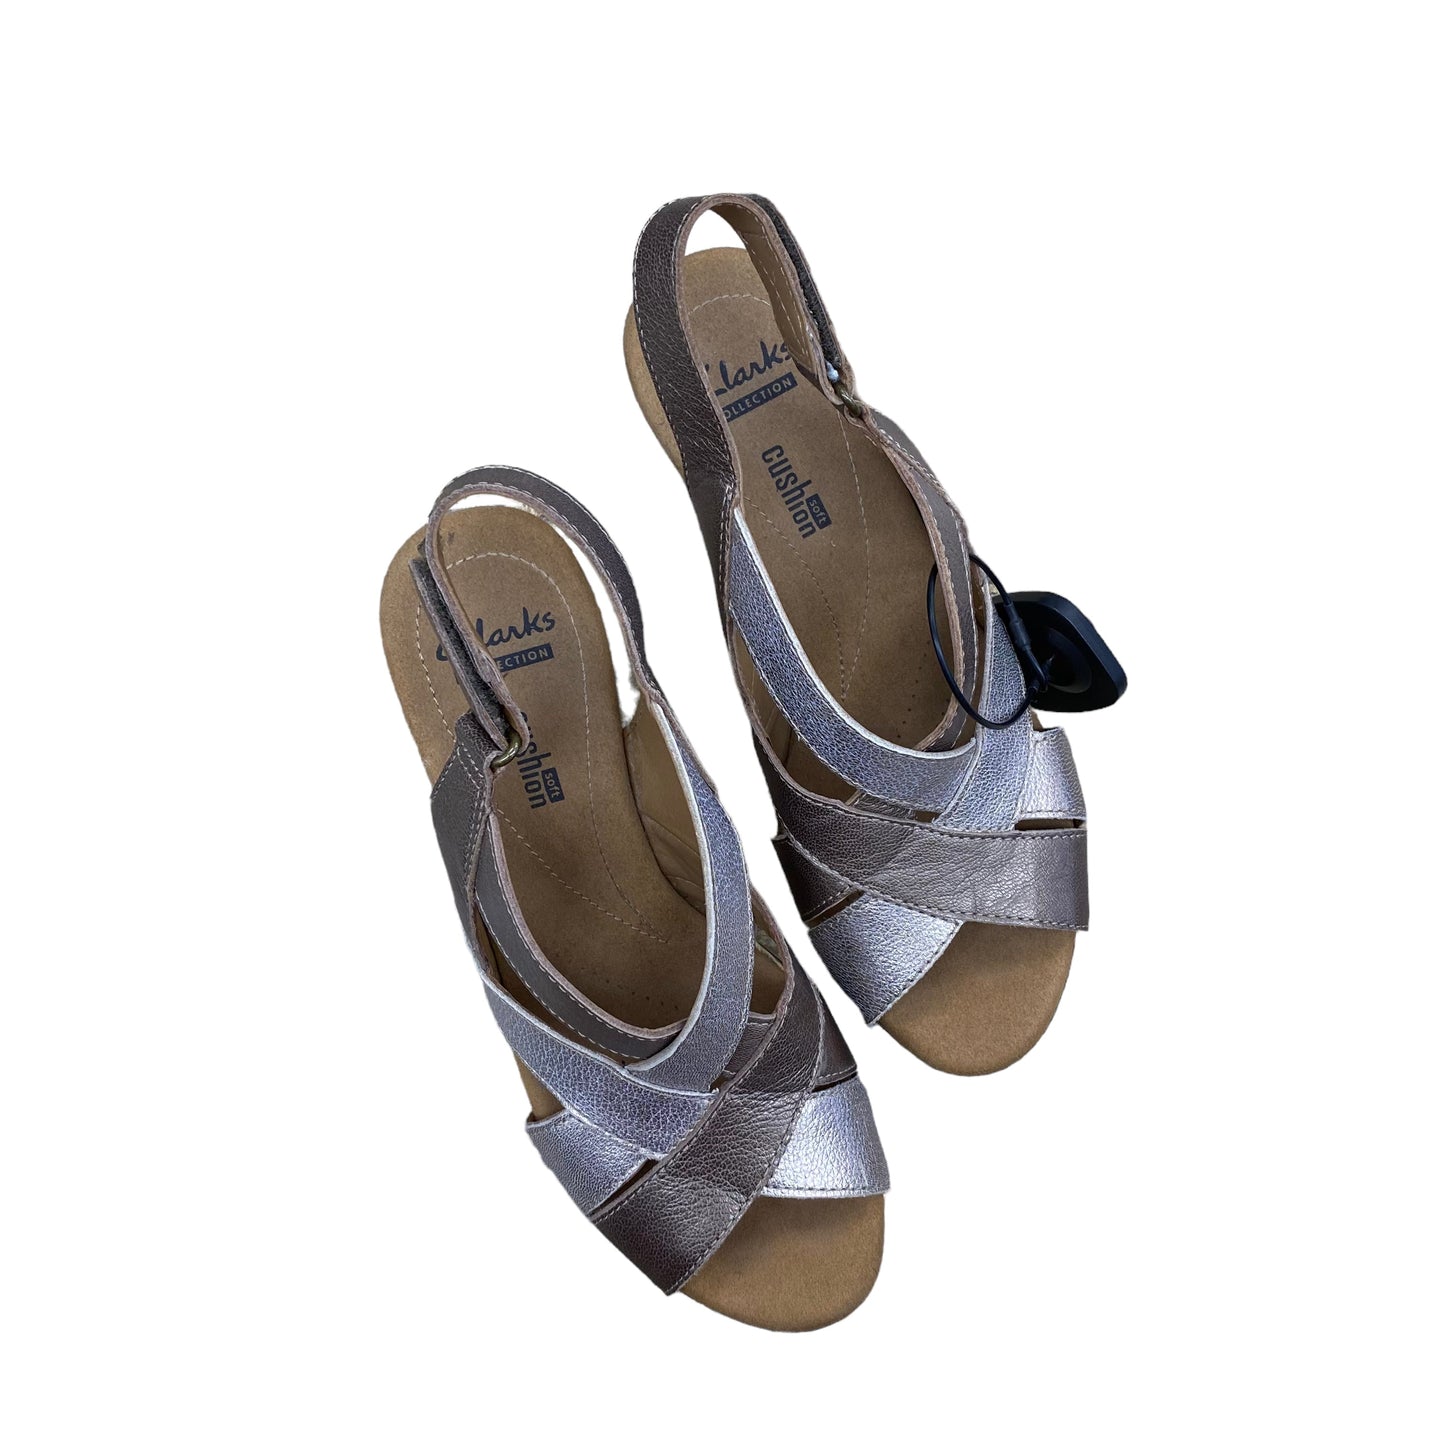 Sandals Heels Platform By Clarks  Size: 7